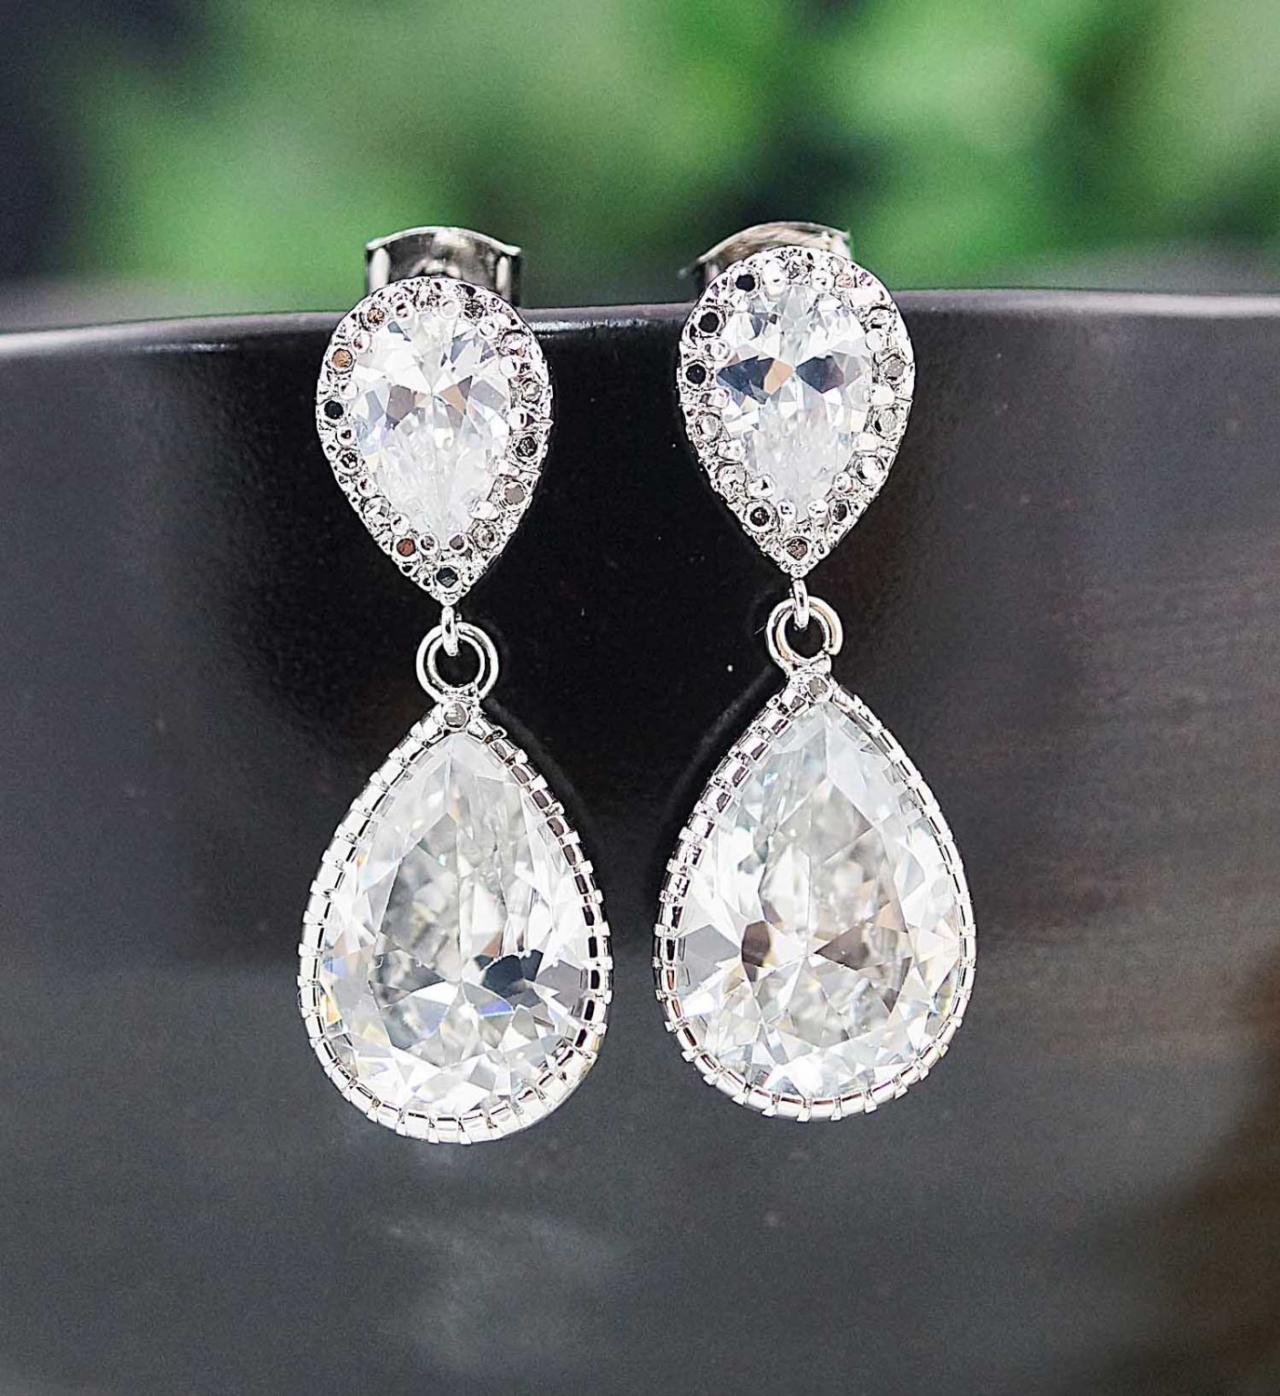 Wedding Bridal Earrings Bridesmaid Gift Bridesmaid Earrings Bridal Jewelry Clear White Large Cubic Zirconia Crystal Tear Drop Earrings